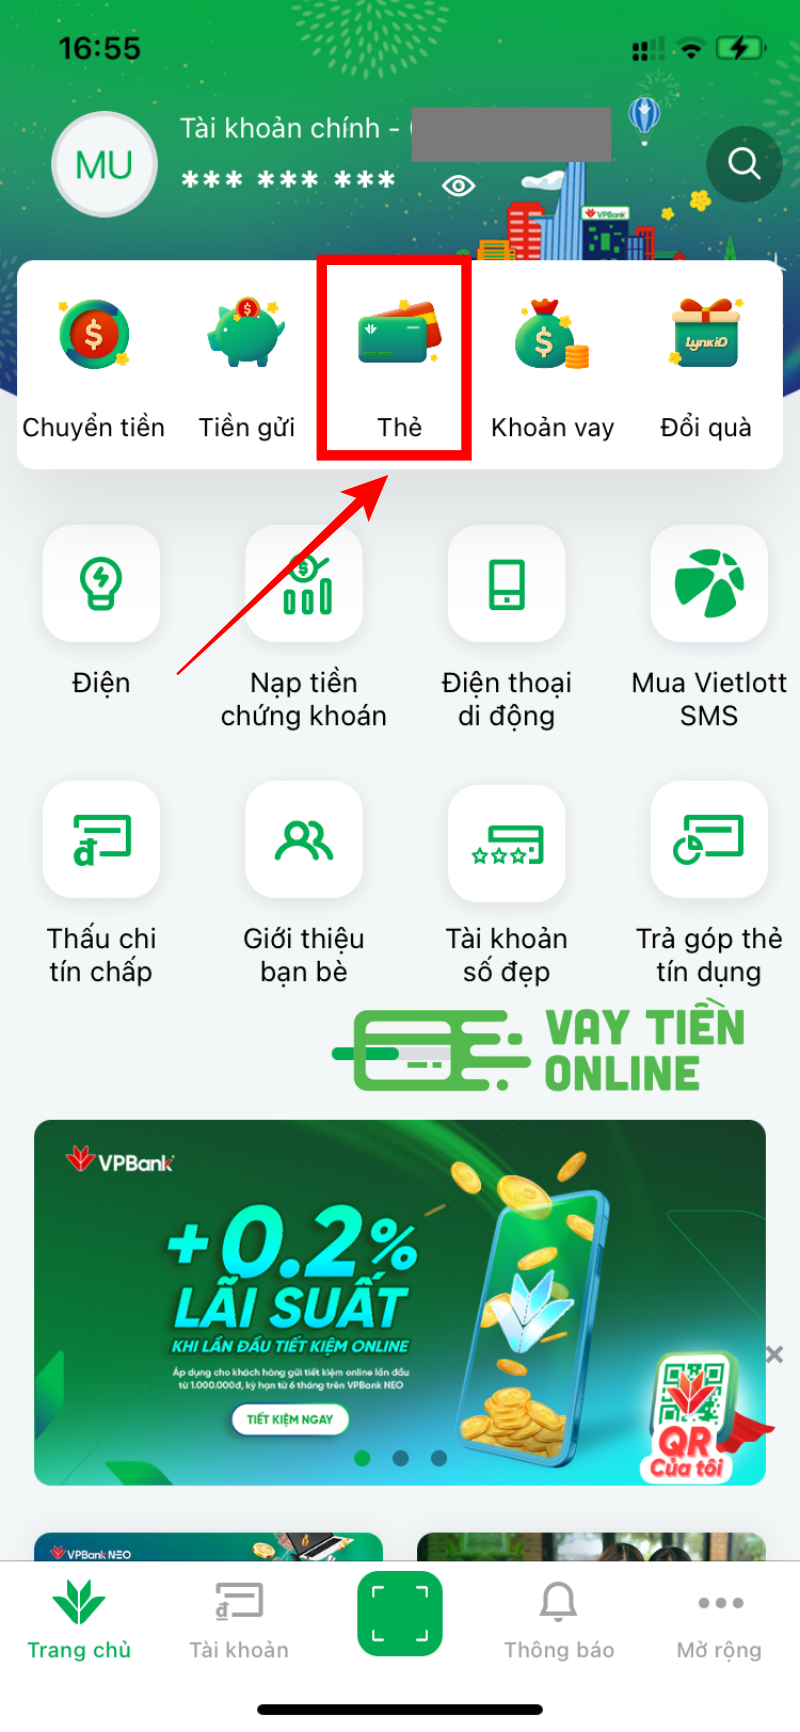 Mo the VPBank online qua app 1 1